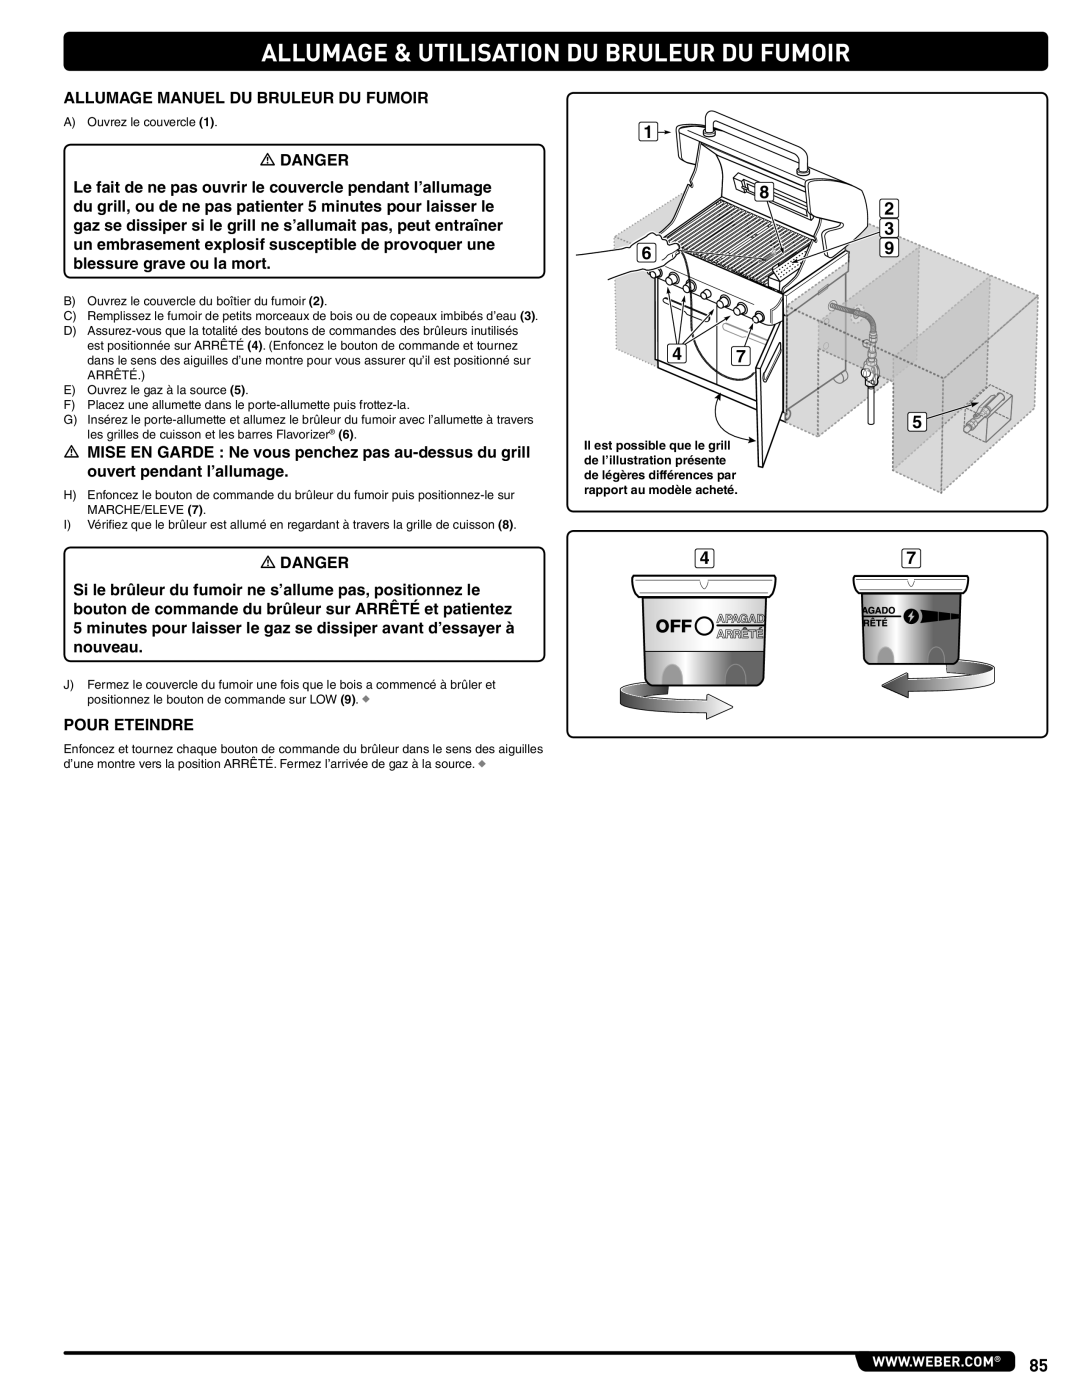 Weber 56576, Summit Gas Grill manual Allumage & Utilisation Du Bruleur Du Fumoir 